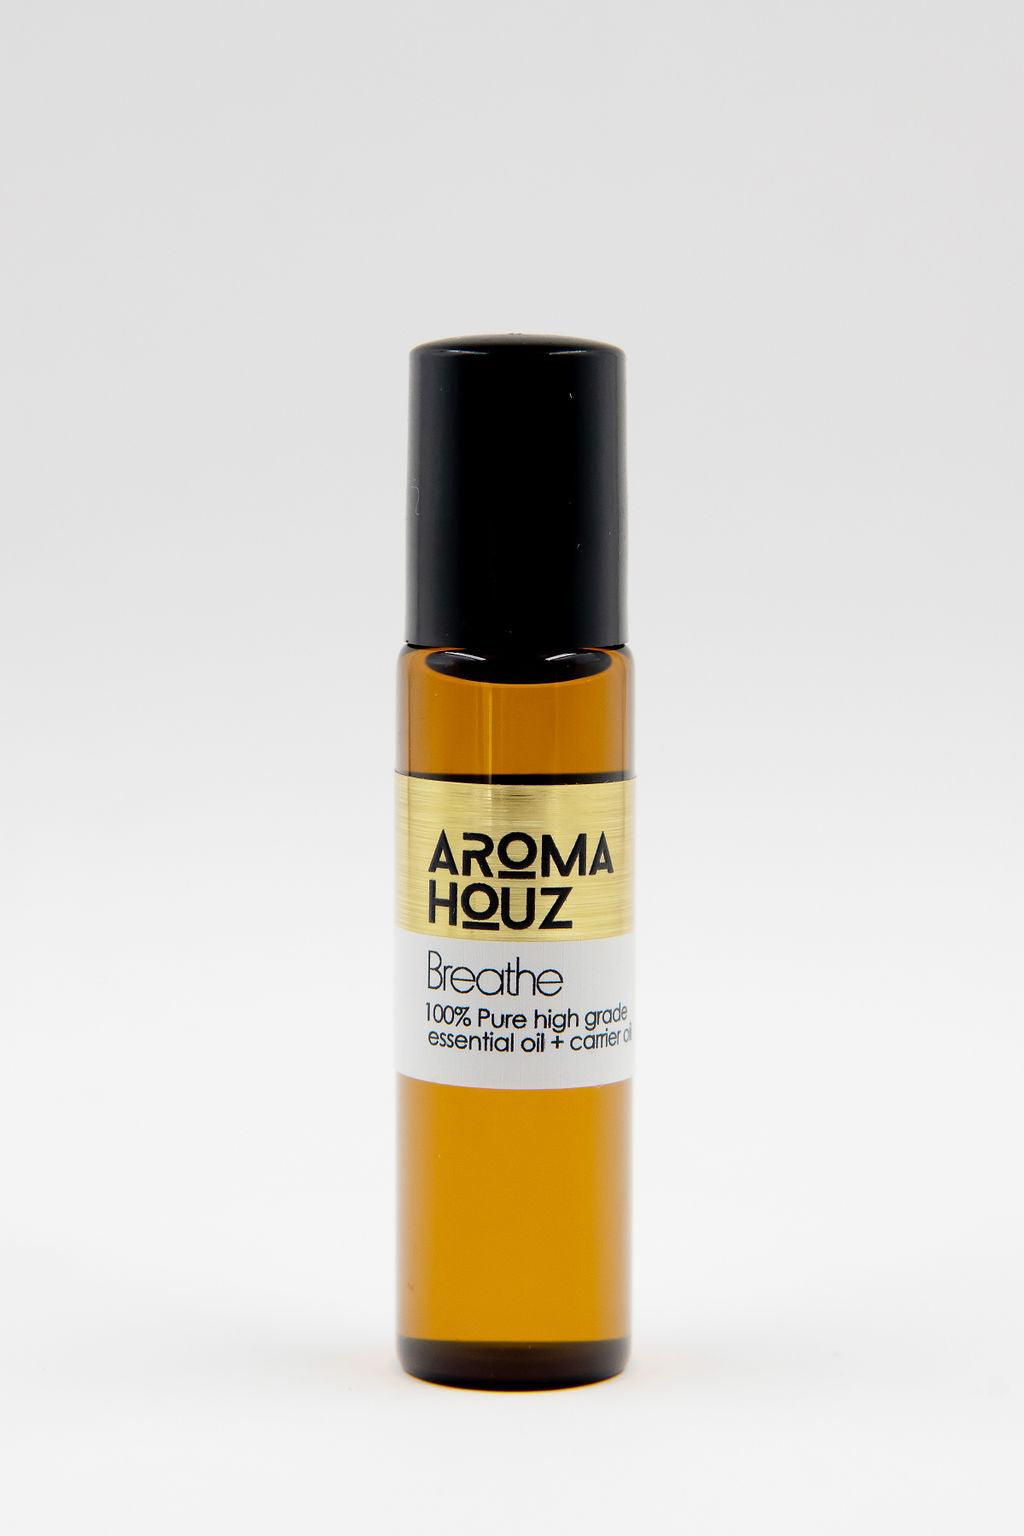 Breathe - 100% Pure Essential Oil - Aroma Houz